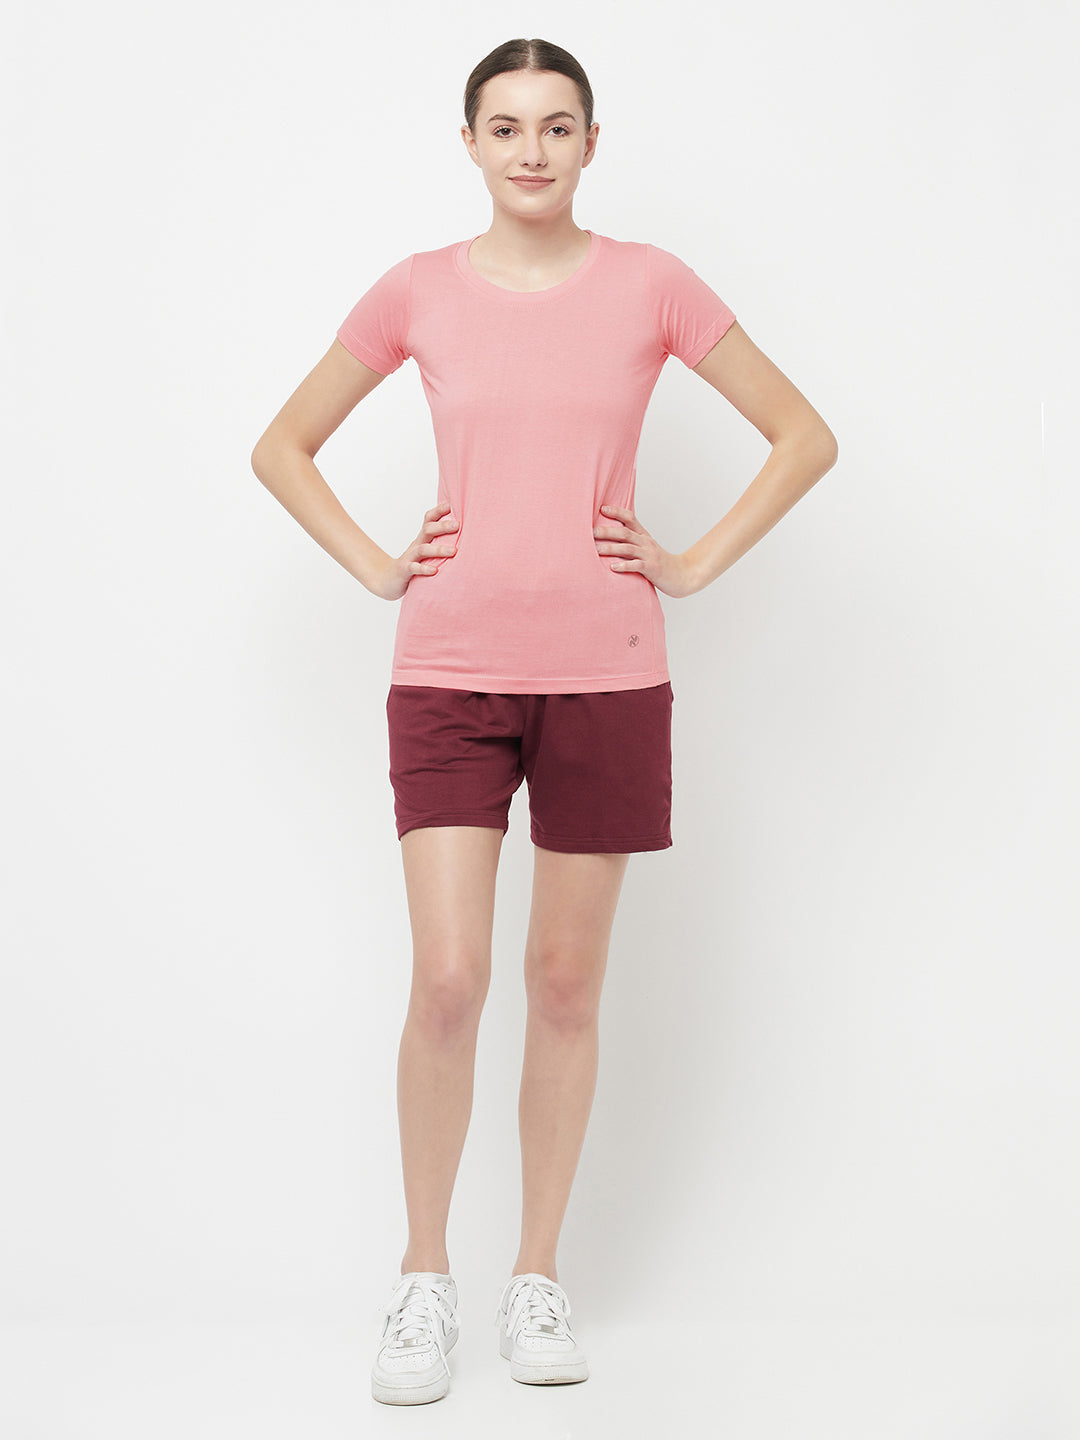 Slim Fit Premium Cotton Tshirts (Pack of 2- Pink, Pink)